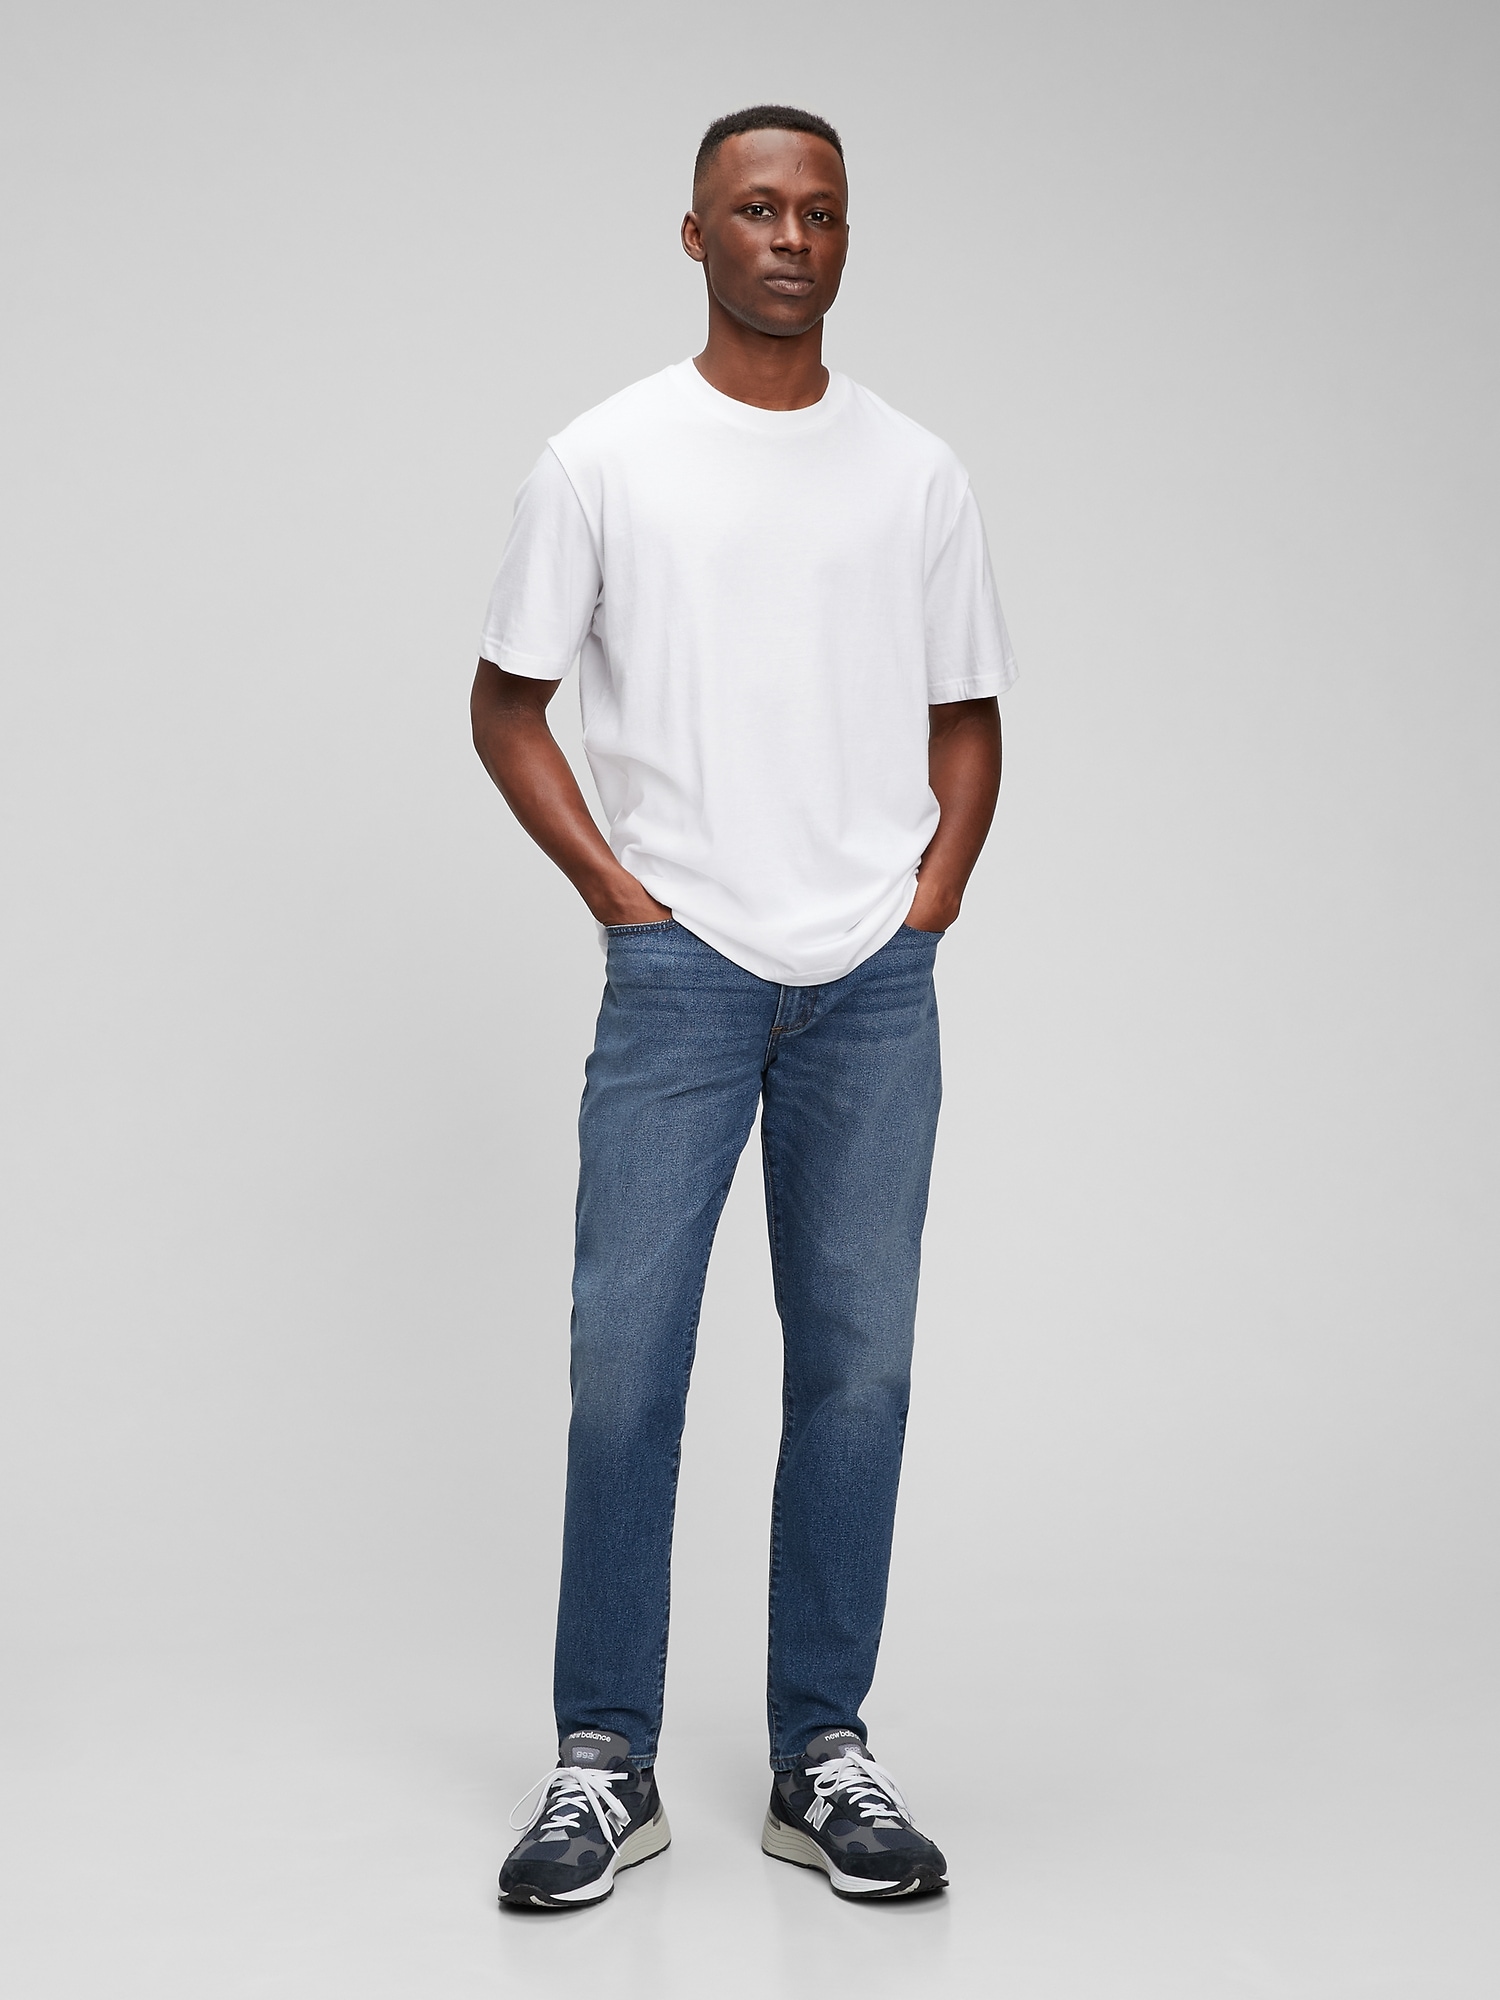 365Temp Performance Skinny Jeans in GapFlex | Gap